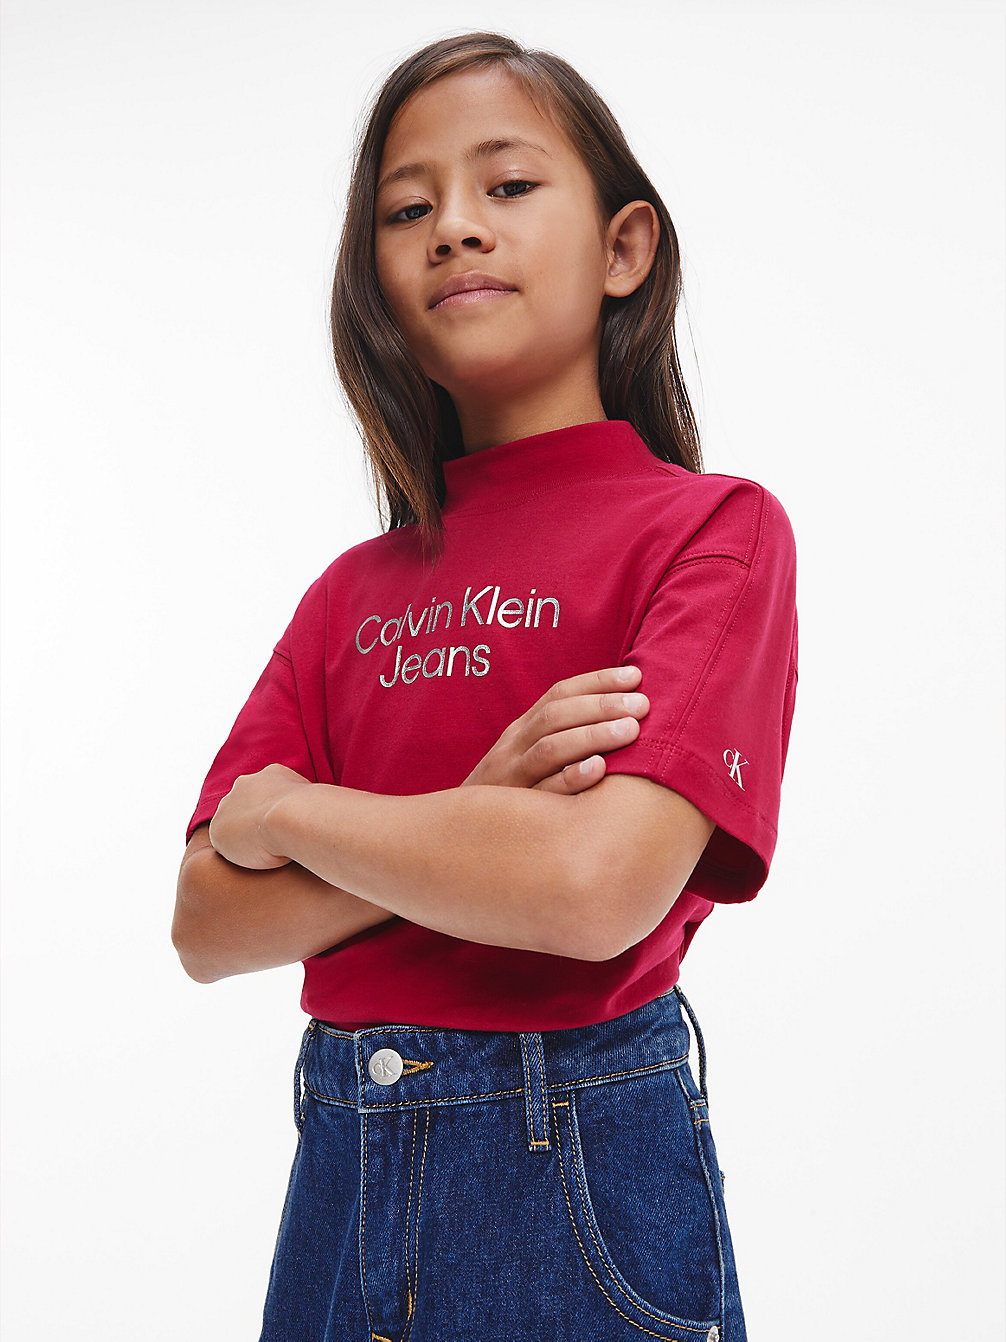 ROYAL BERRY Logo-T-Shirt undefined girls Calvin Klein